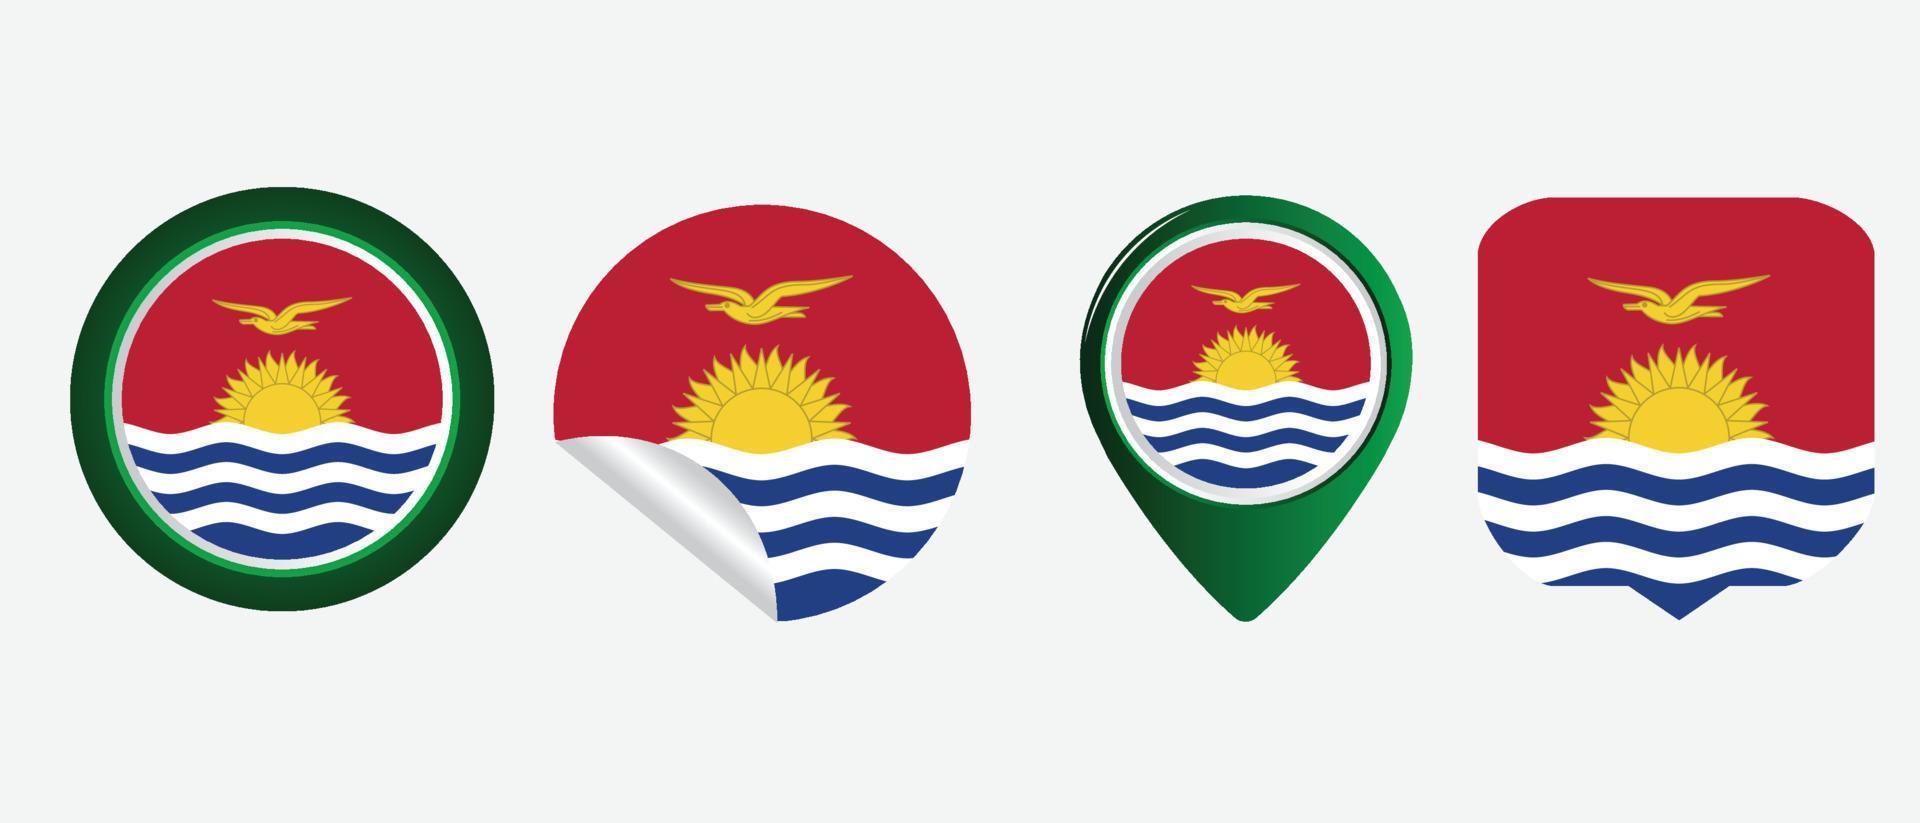 Kiribati flag icon . web icon set . icons collection flat. Simple vector illustration.